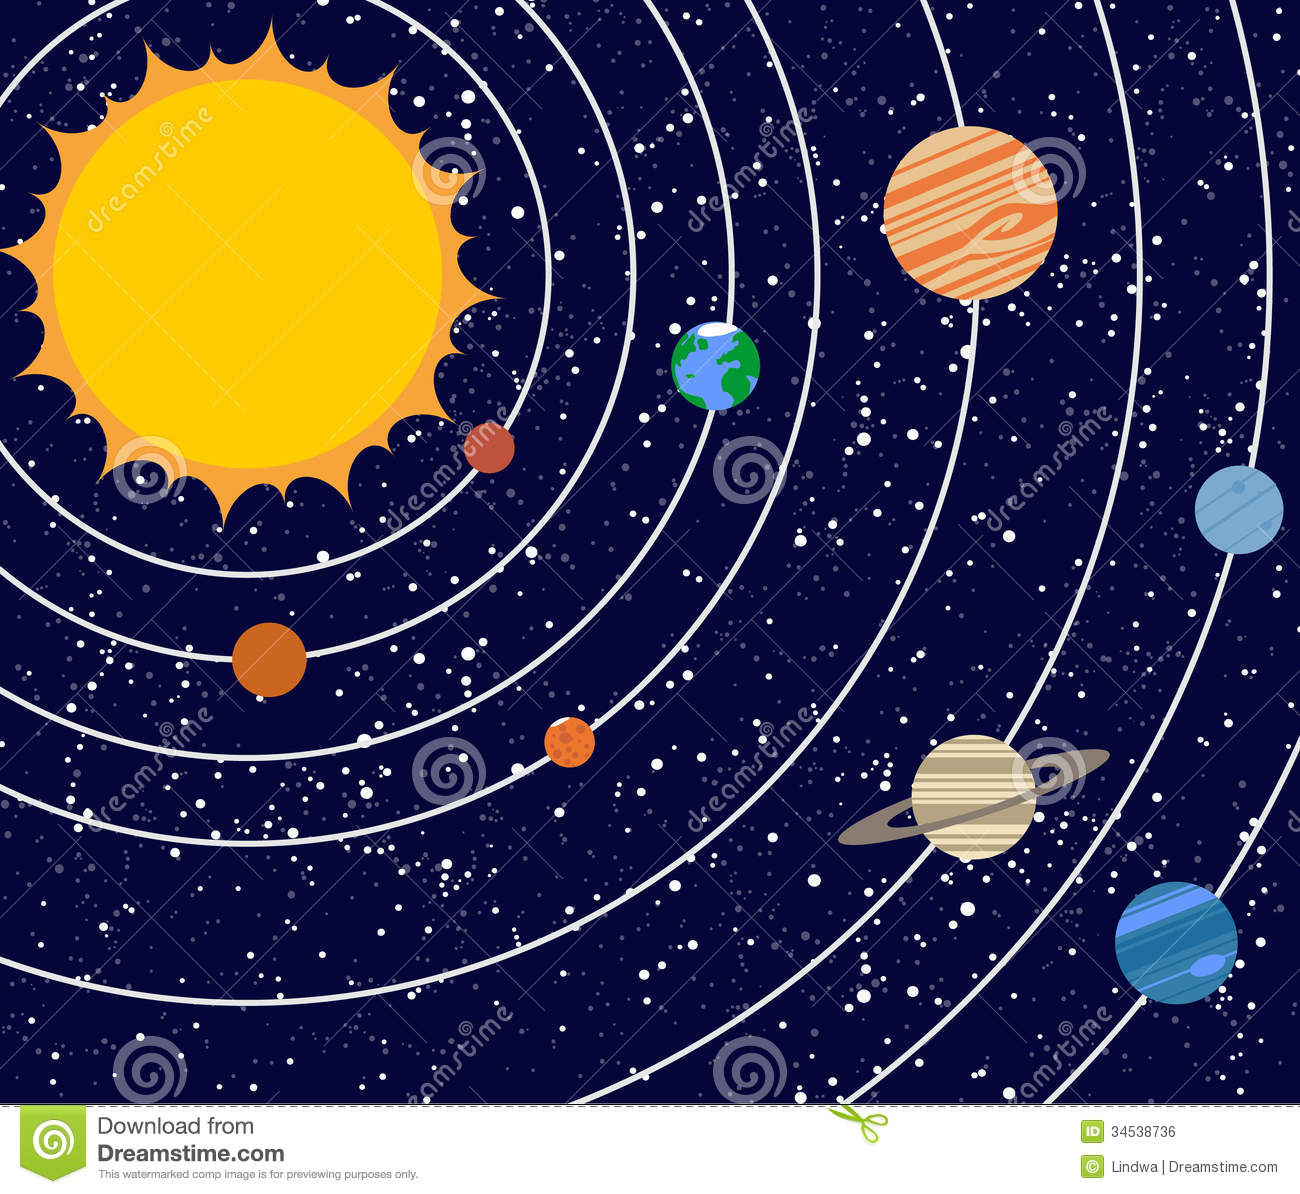 Vecotr Solar System Illustration Royalty Free Stock Image   Image